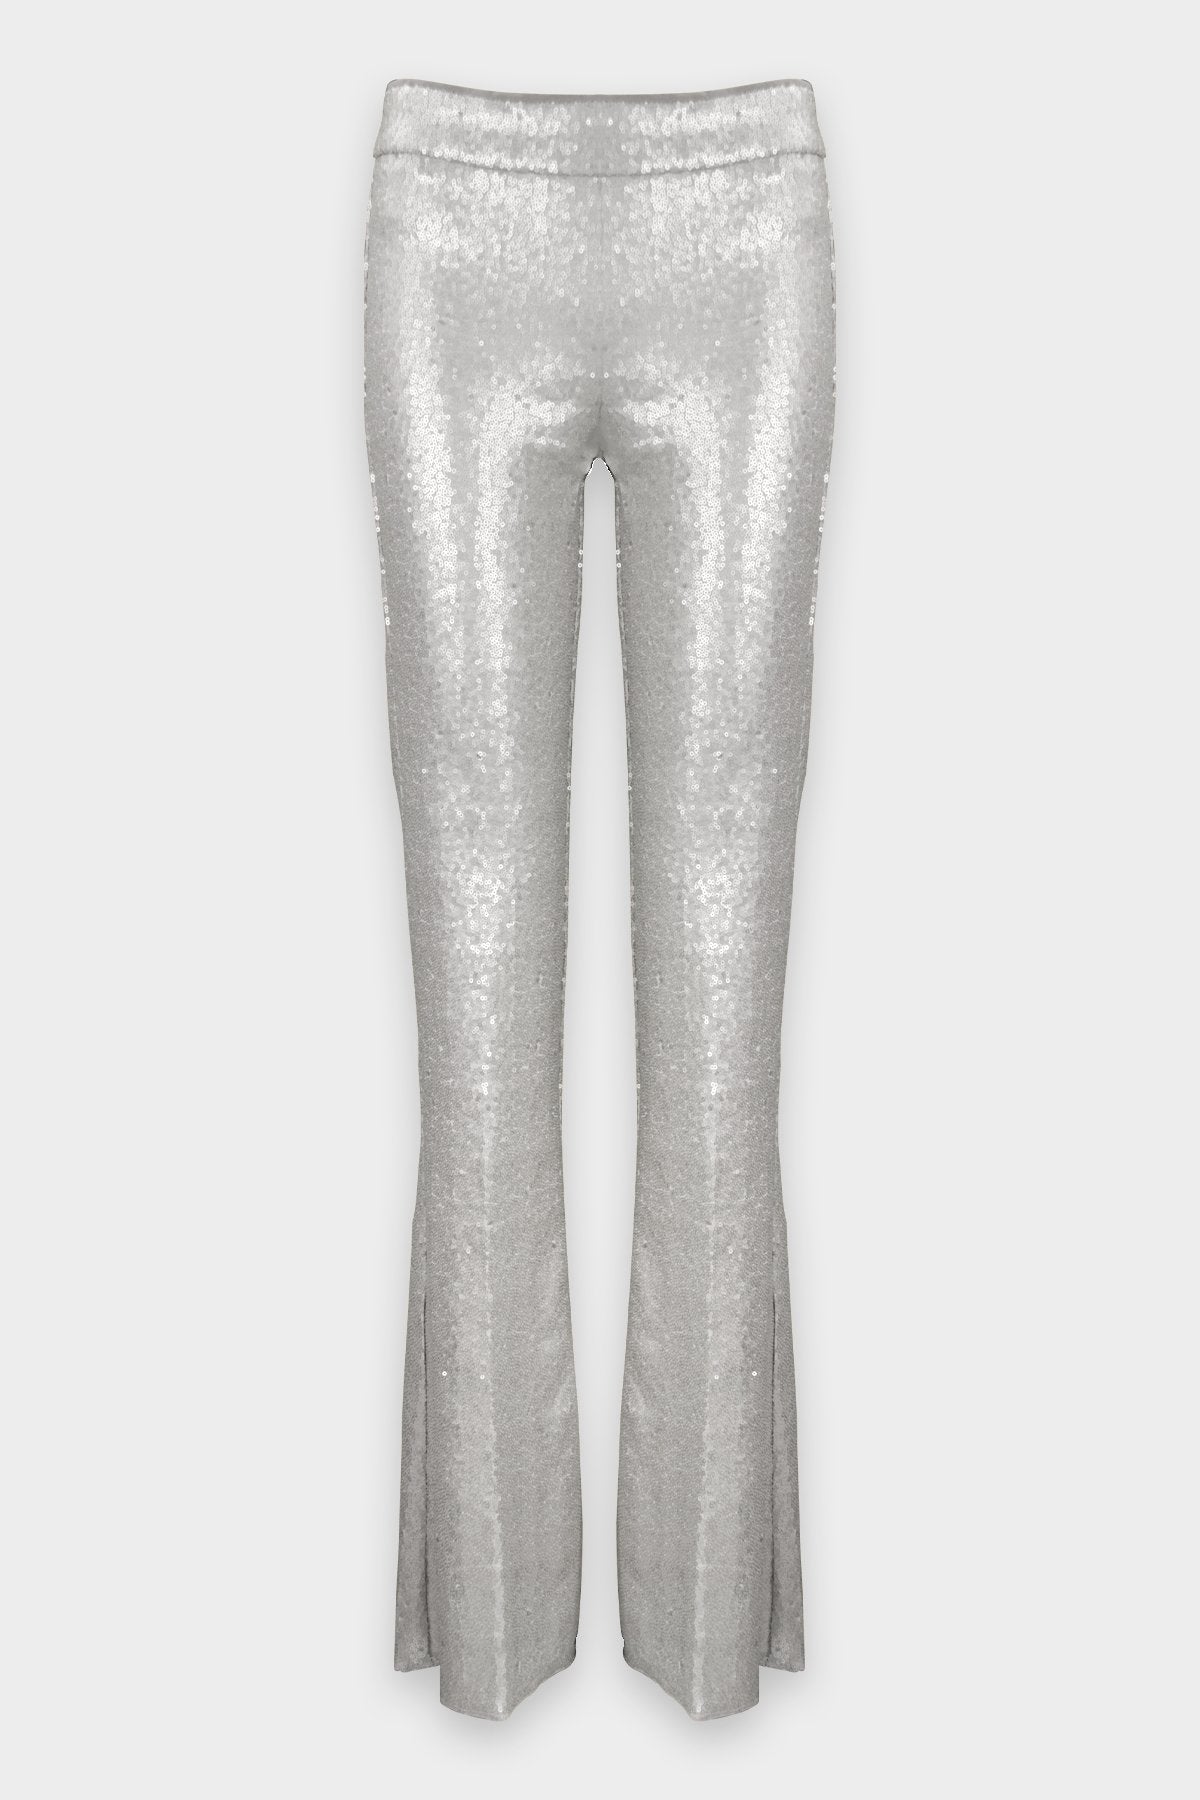 Bellini Sequin Pant in Silver - shop-olivia.com